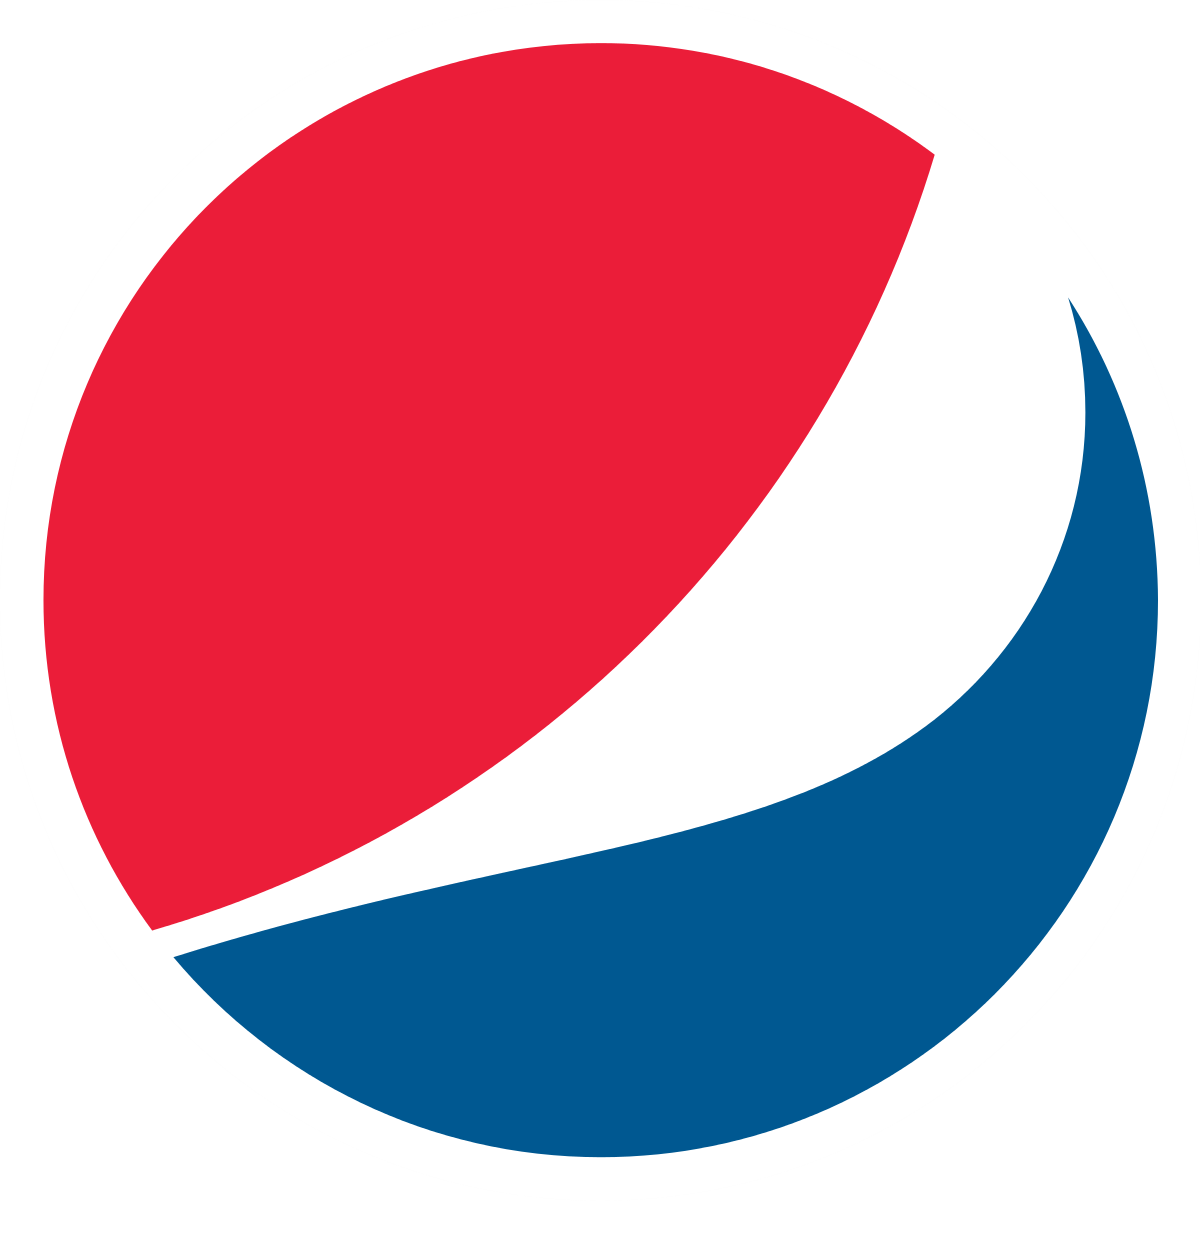 Pepsi_logo_2014.svg (2).png